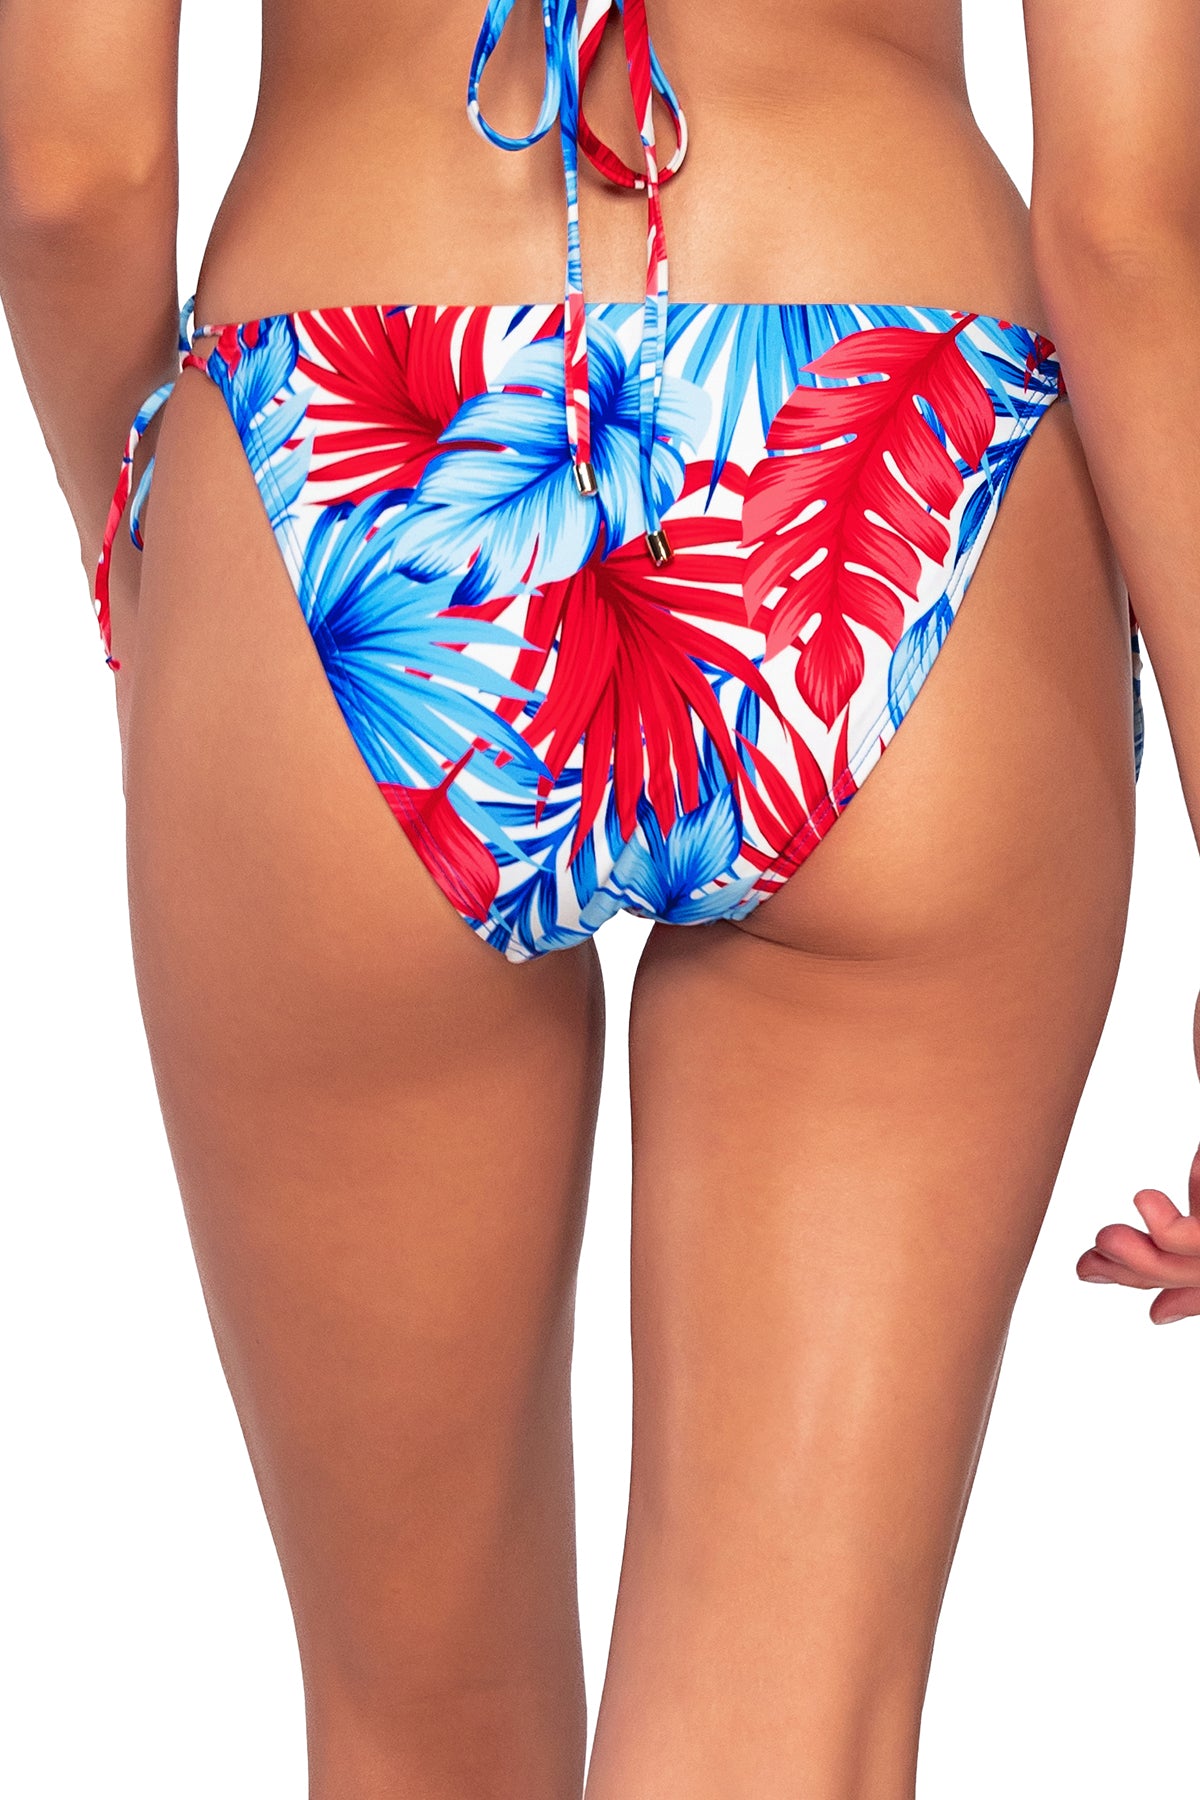 Back view of the Sunsets American Dream Everlee Tie Side bikini bottom